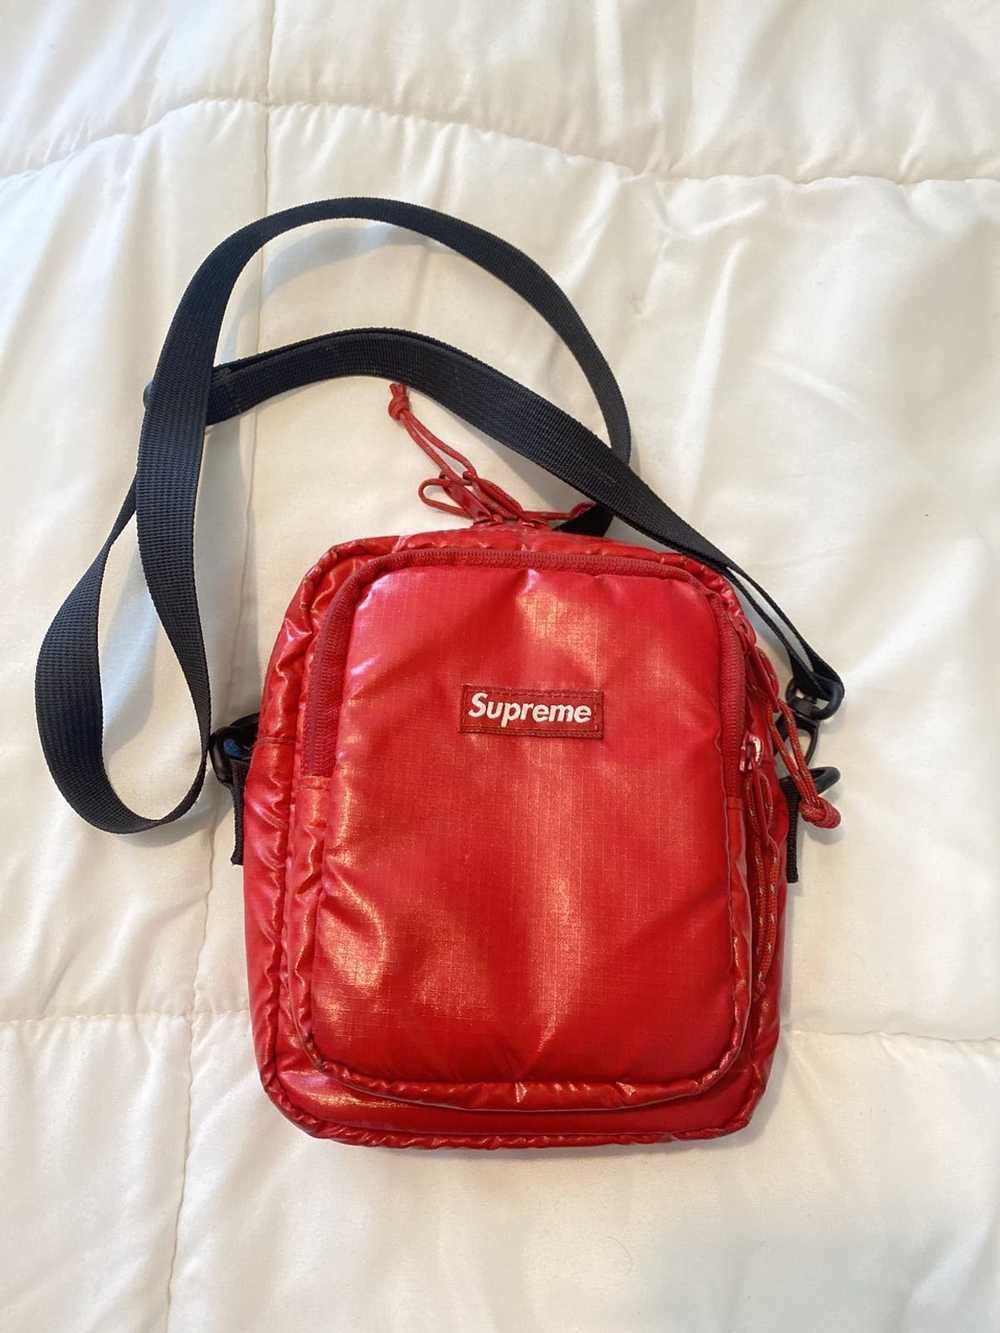 Supreme crossbody bag red - Gem